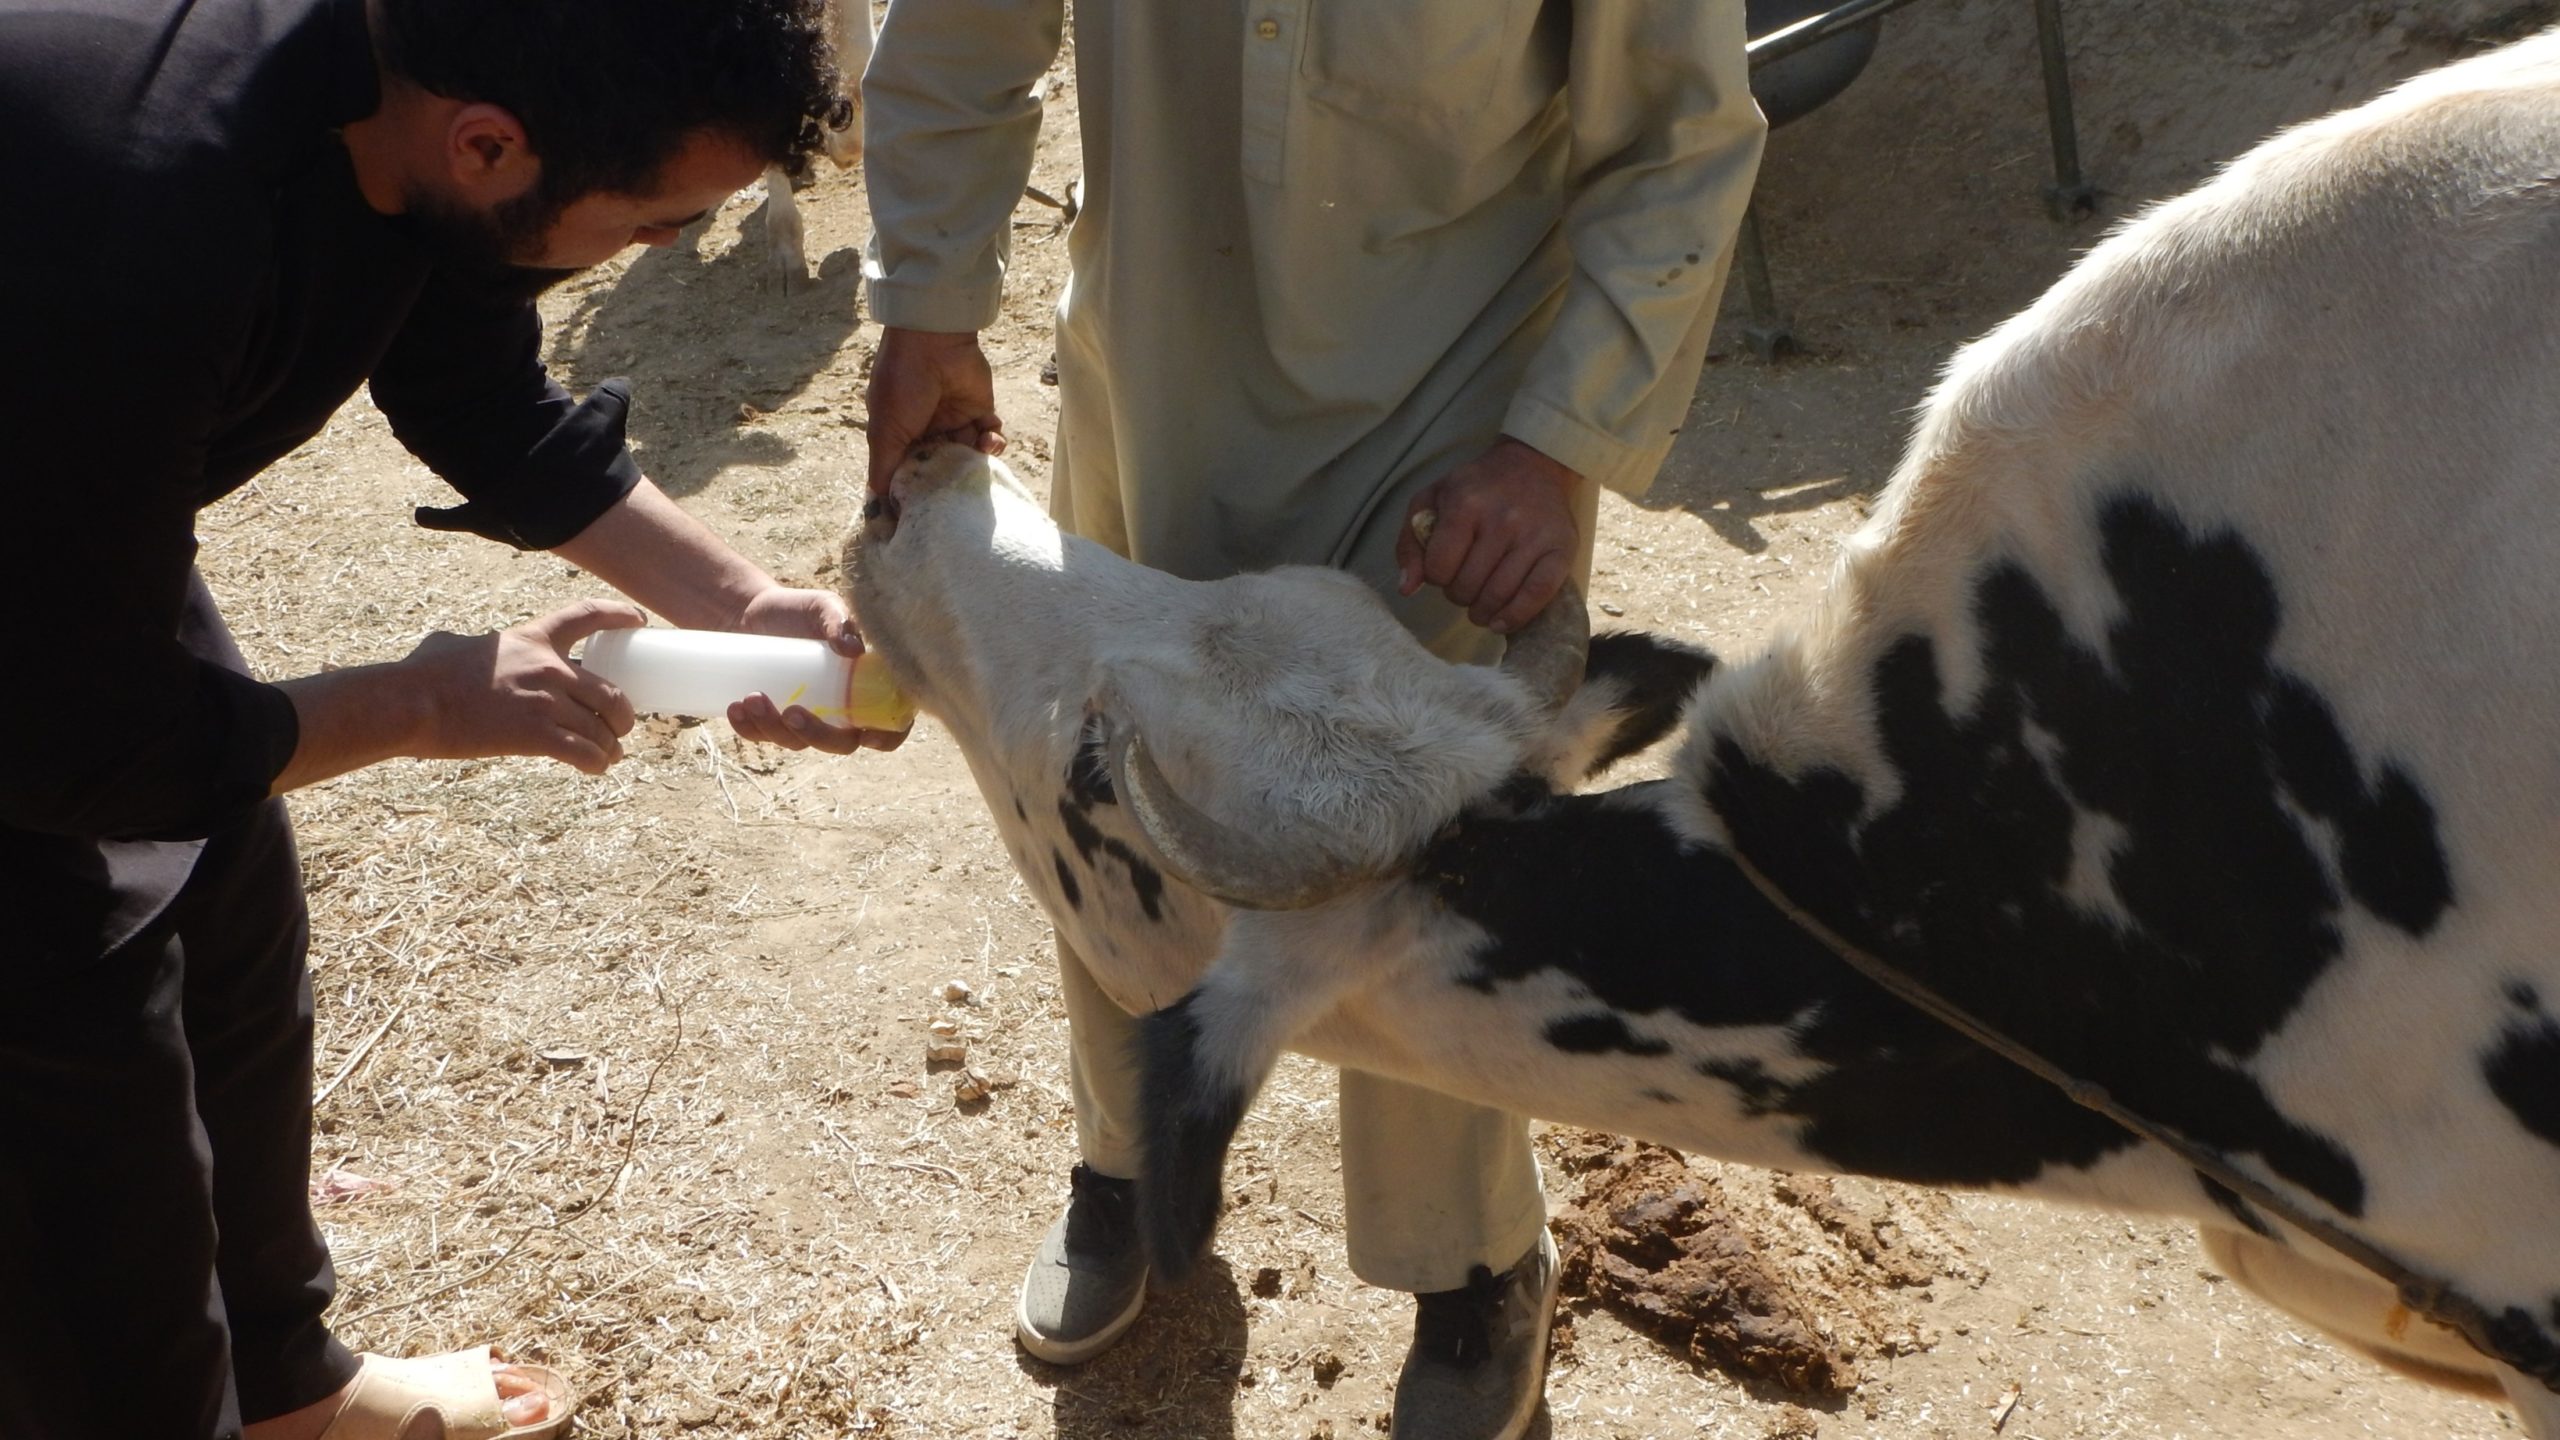 A white bovine being syringe fed or irrigated.